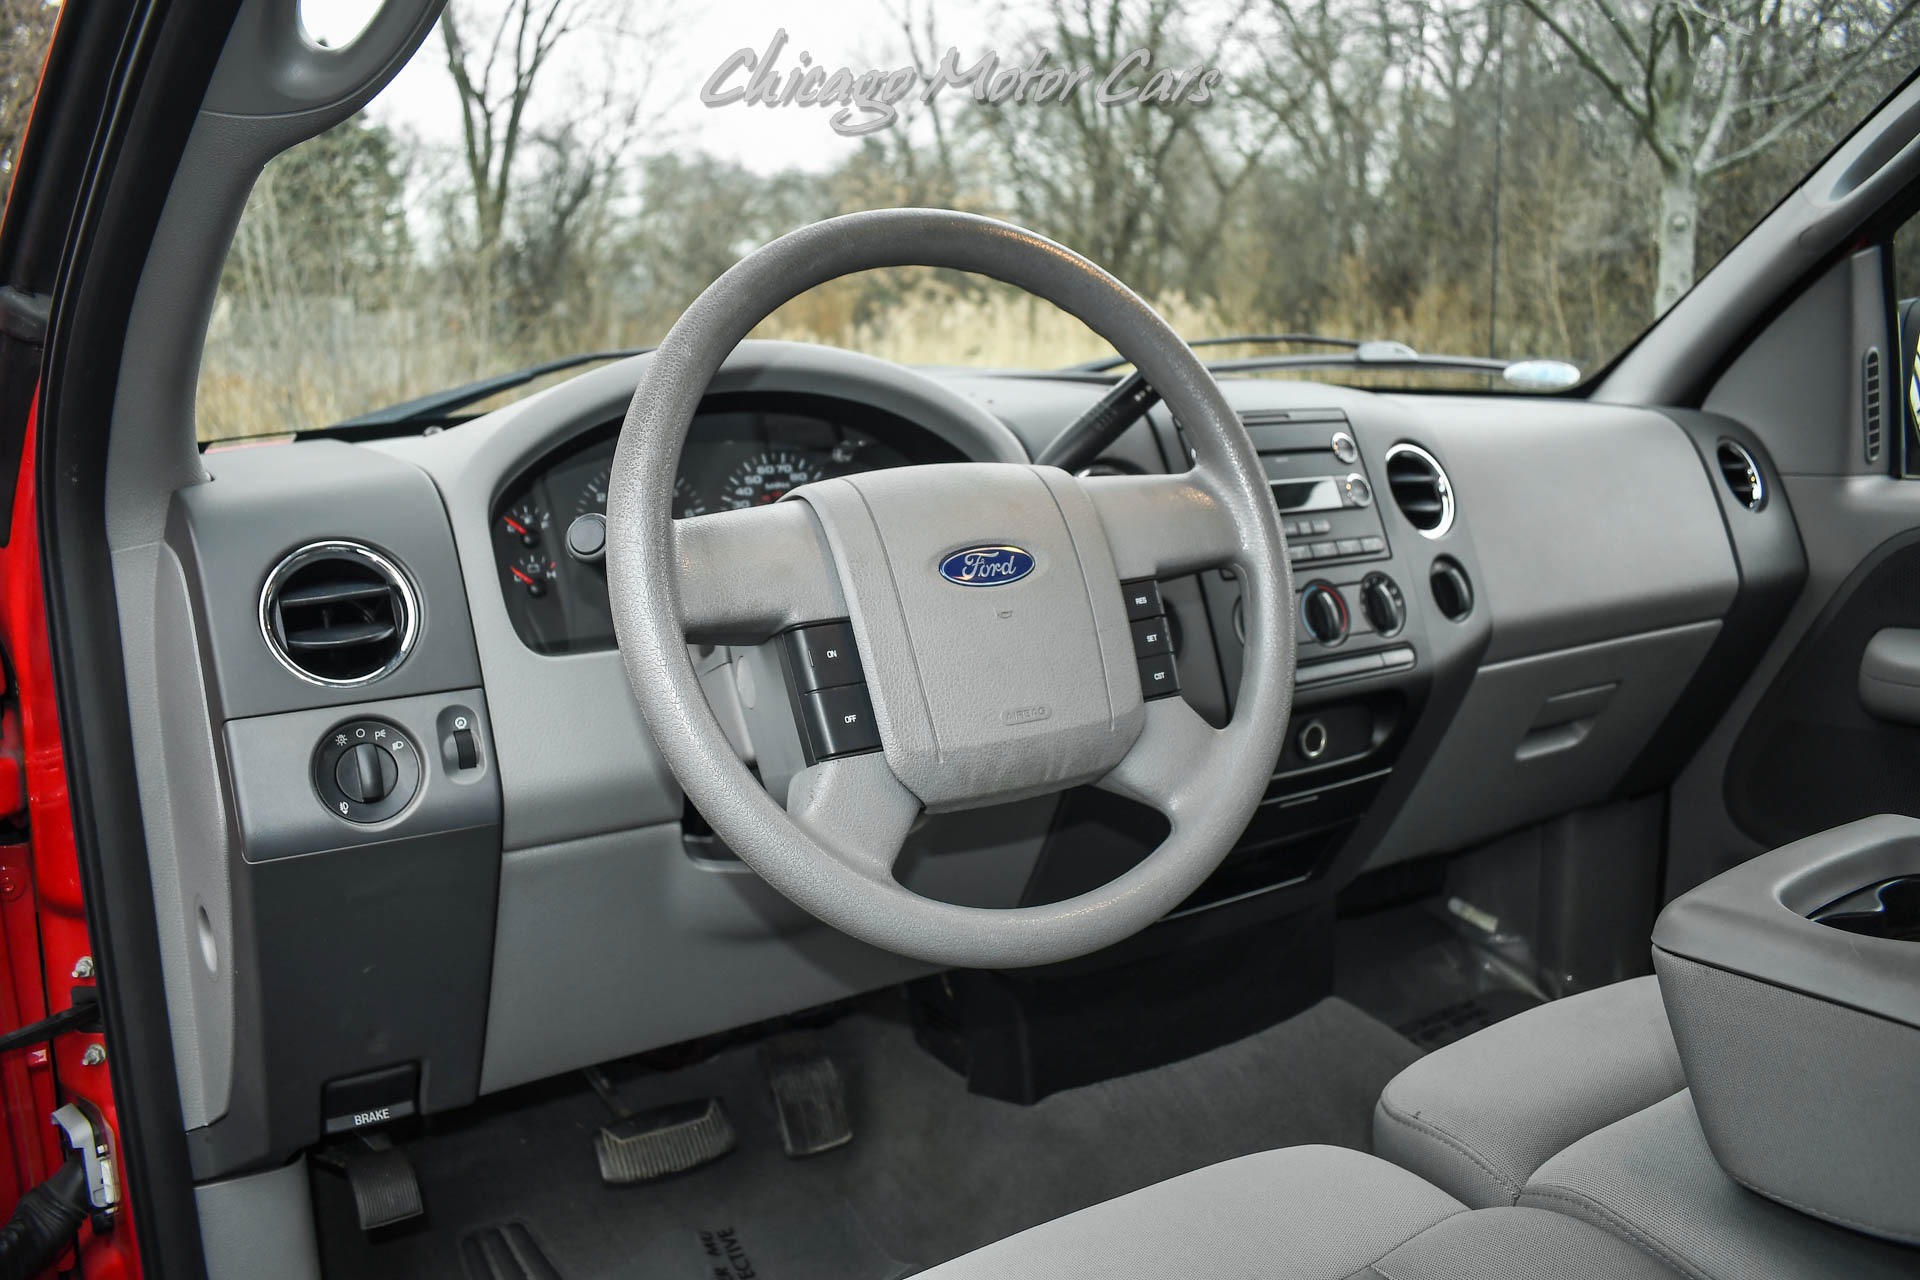 Used-2008-Ford-F150-XLT-4X4-Supercab-Pickup-145-WB-54L-V8-Trailer-Tow-Pkg-7200-GVWR-Pkg